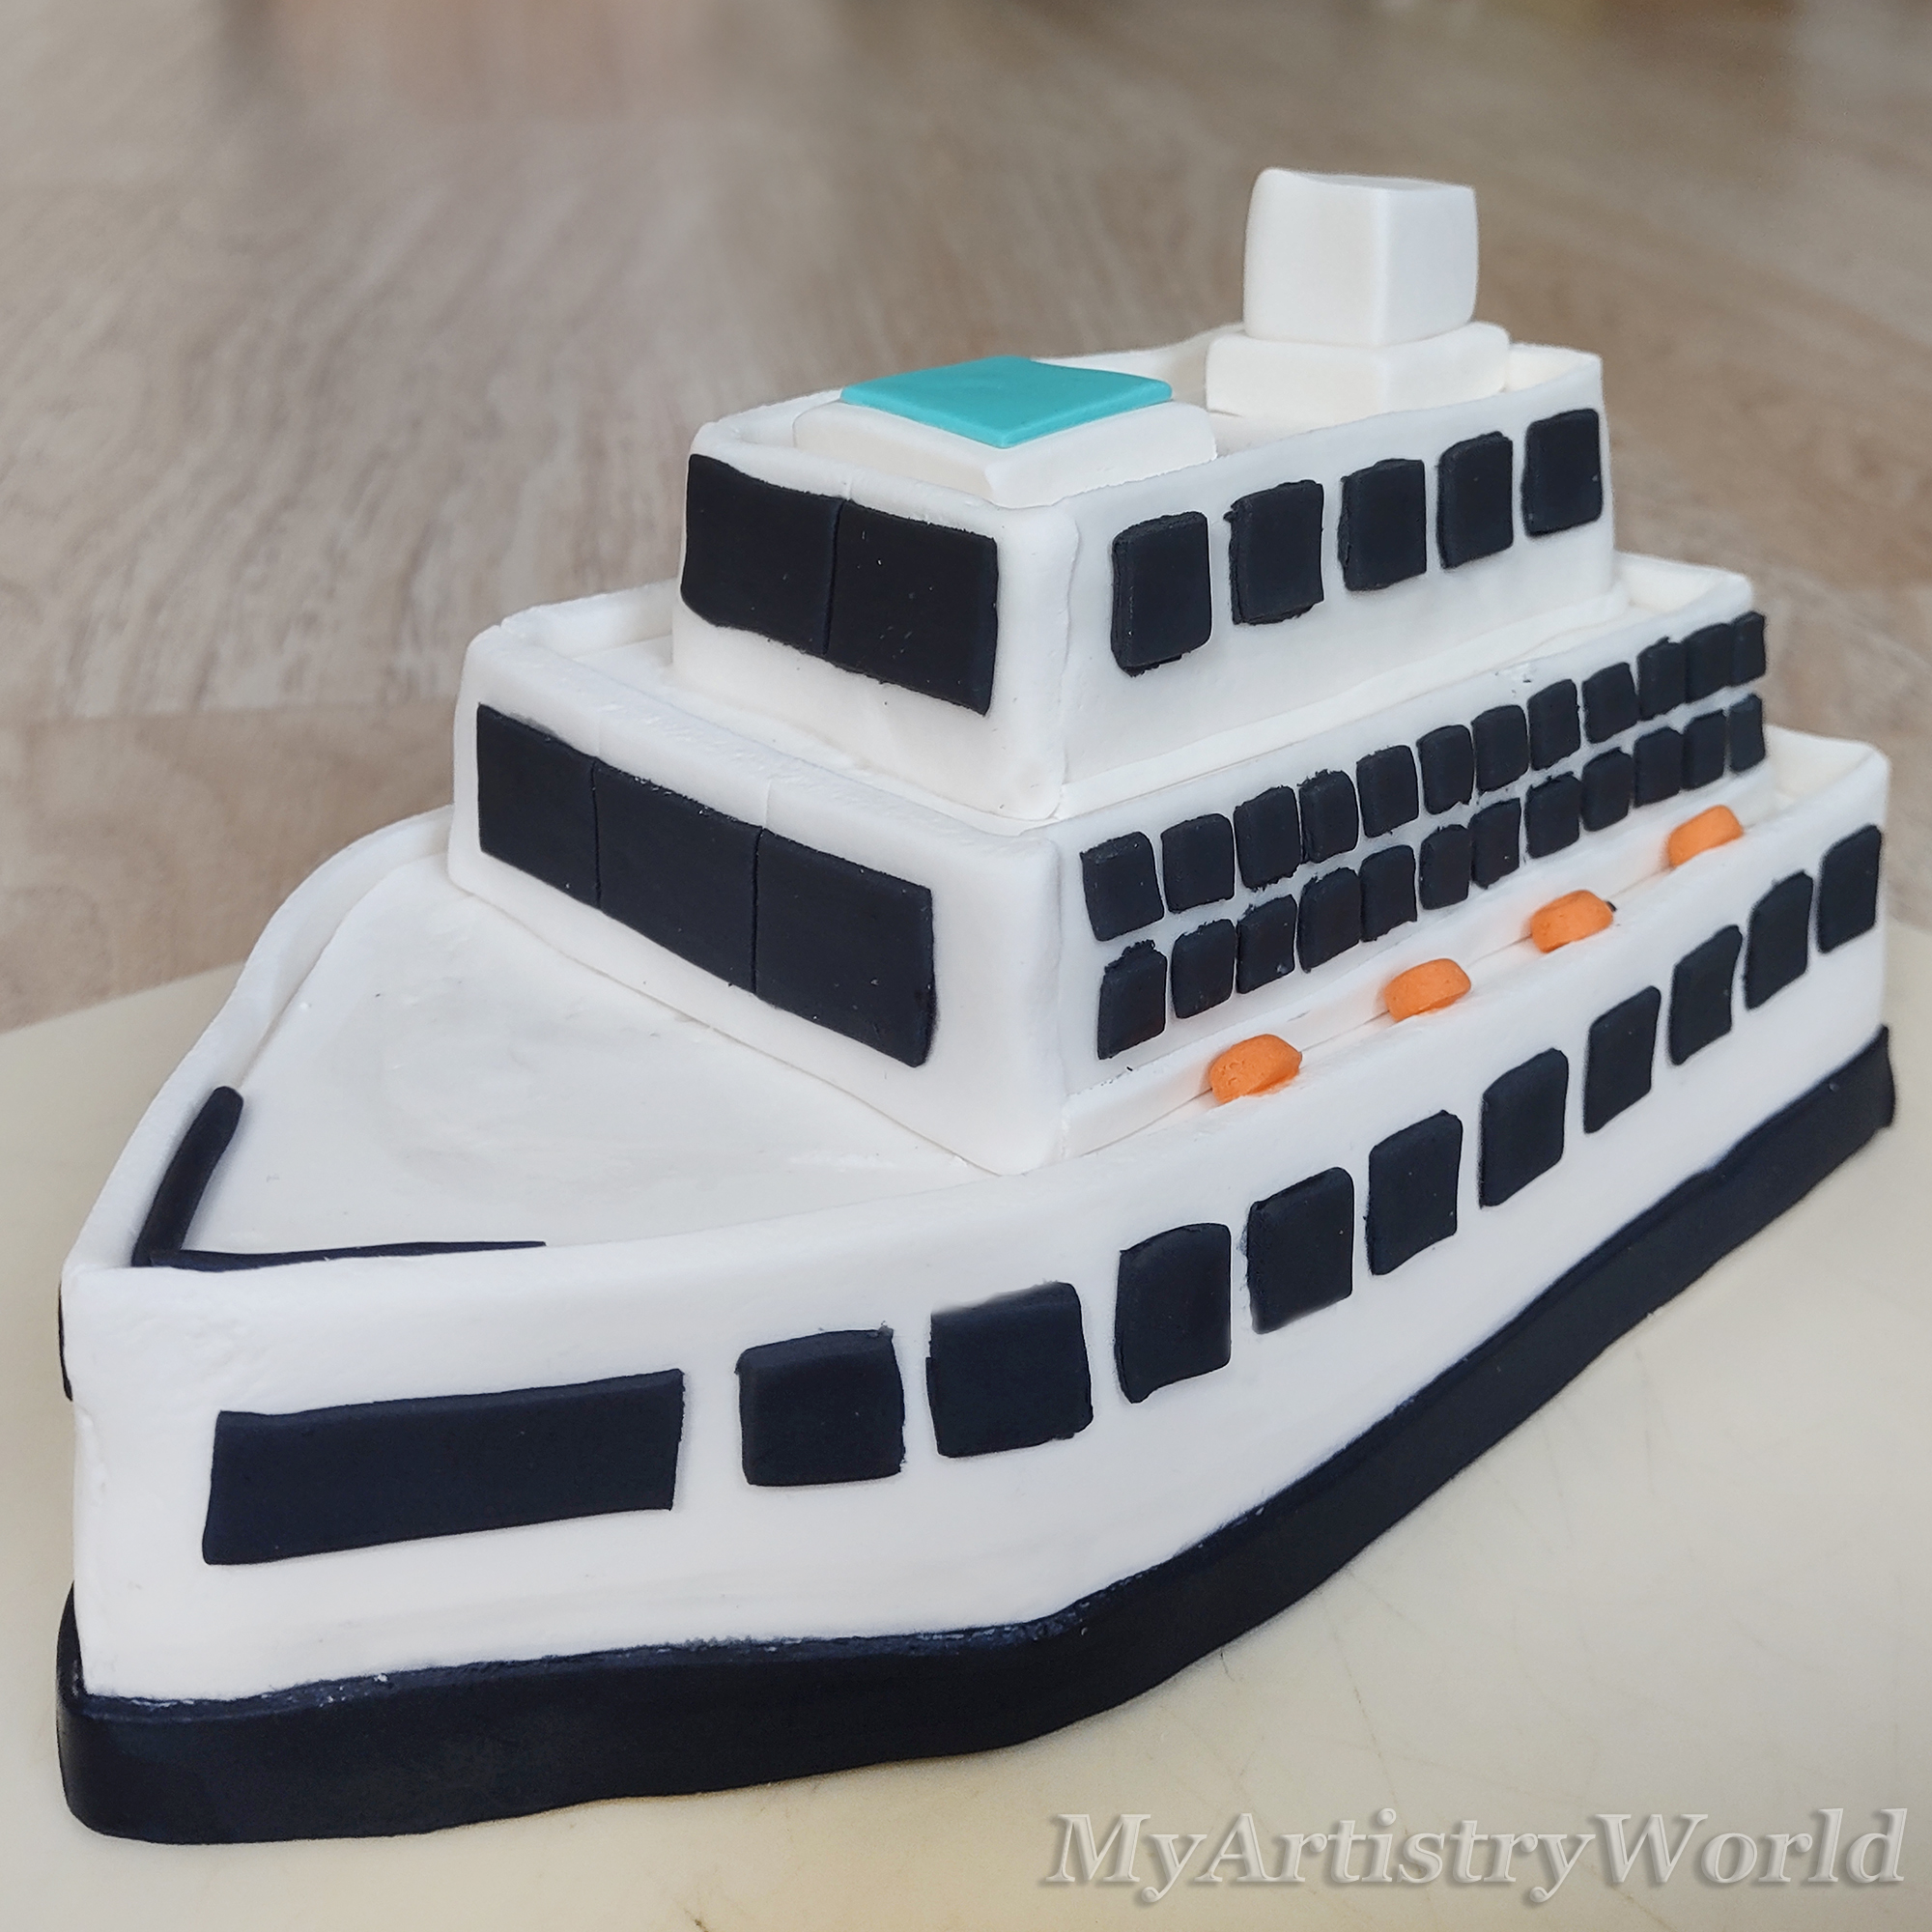 Cruise ship cake topper